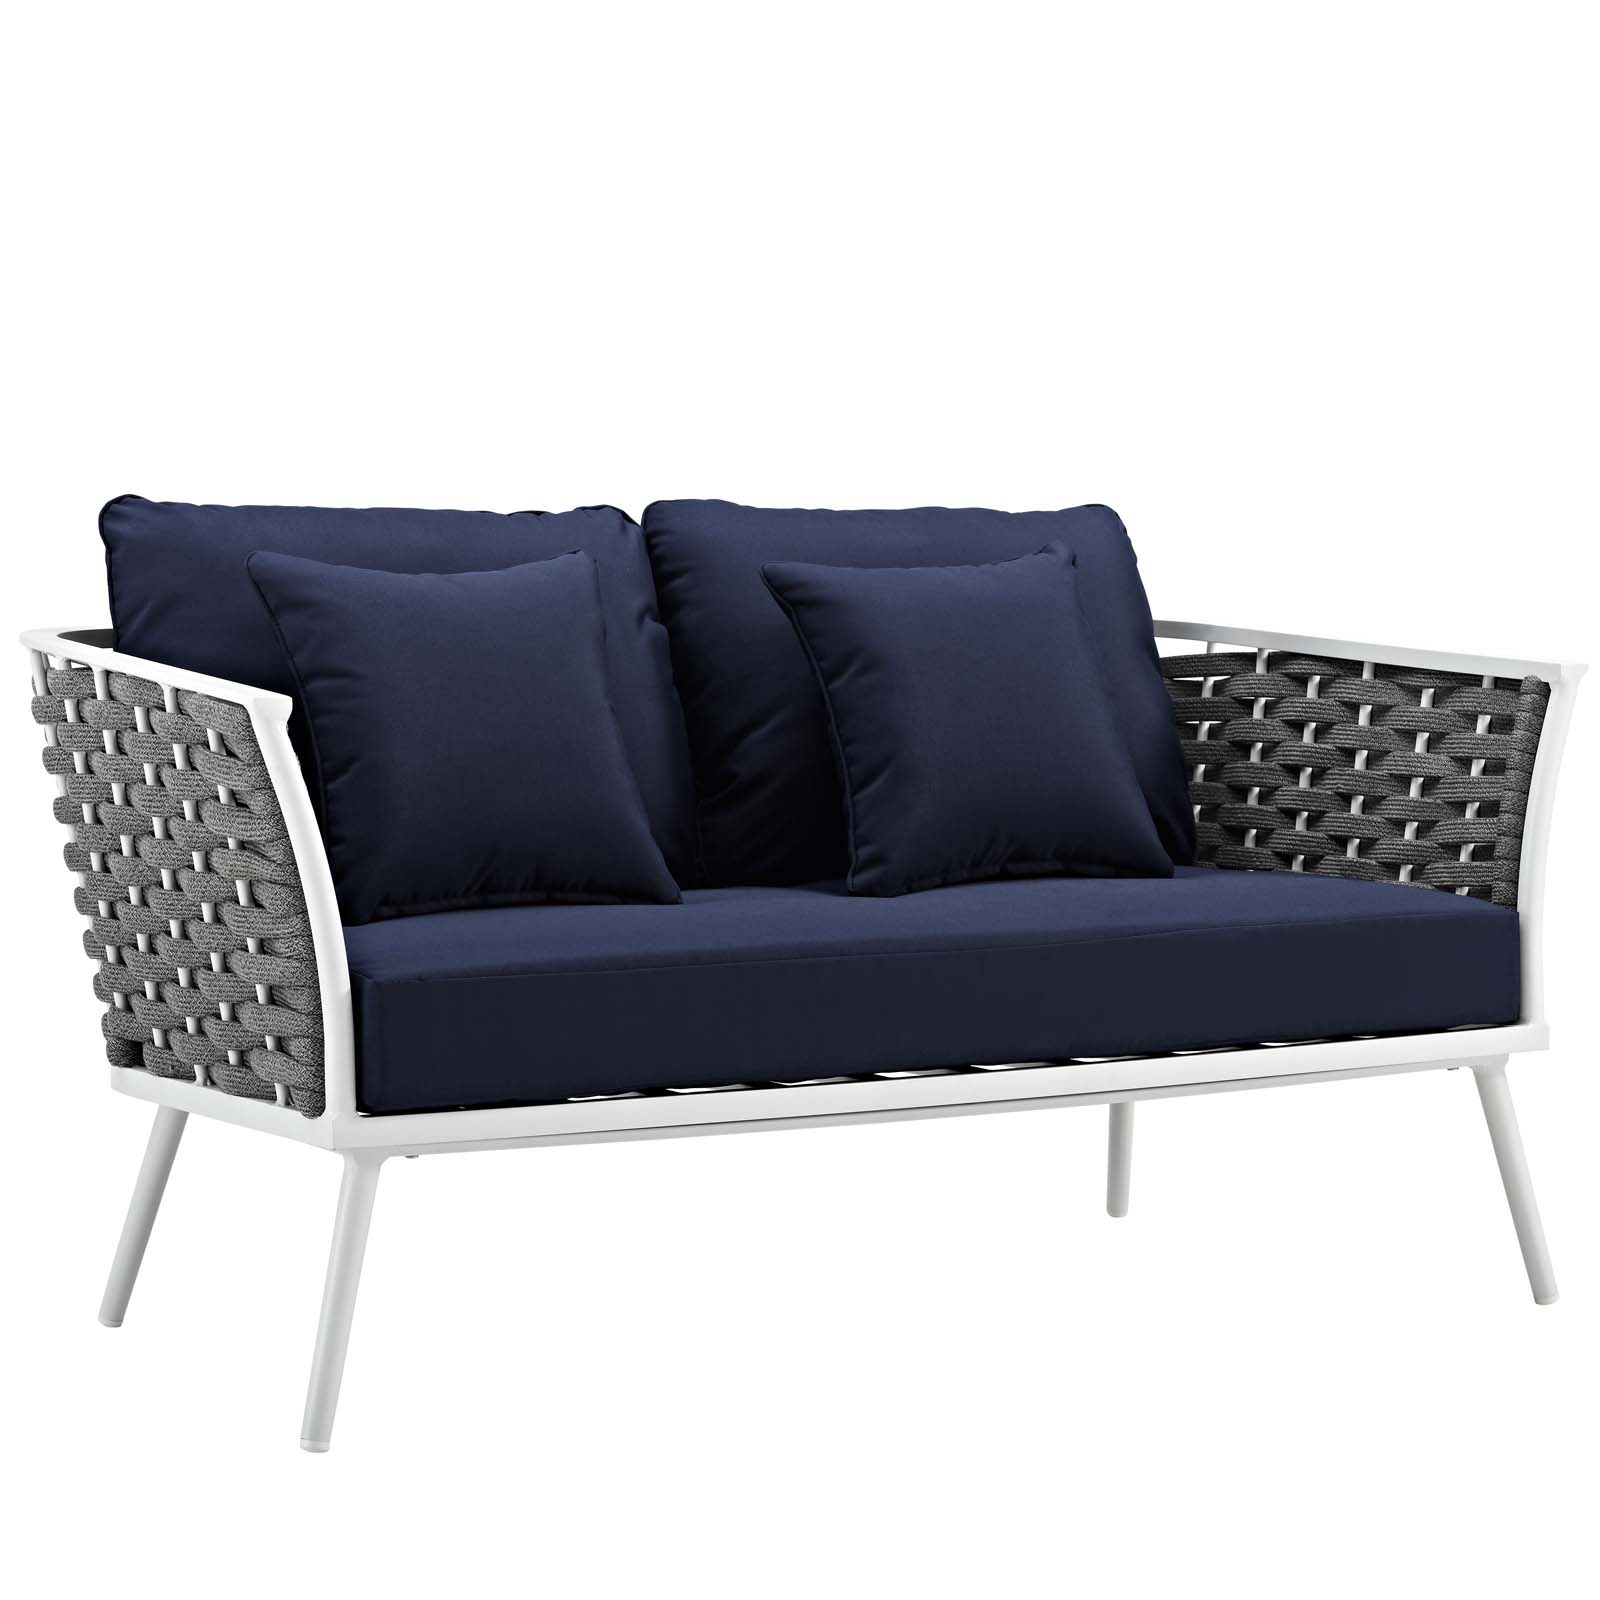 Modern Contemporary Urban Design Outdoor Patio Balcony Garden Furniture Lounge Chair, Sofa and Table Set, Fabric Aluminium, White Navy - image 3 of 11